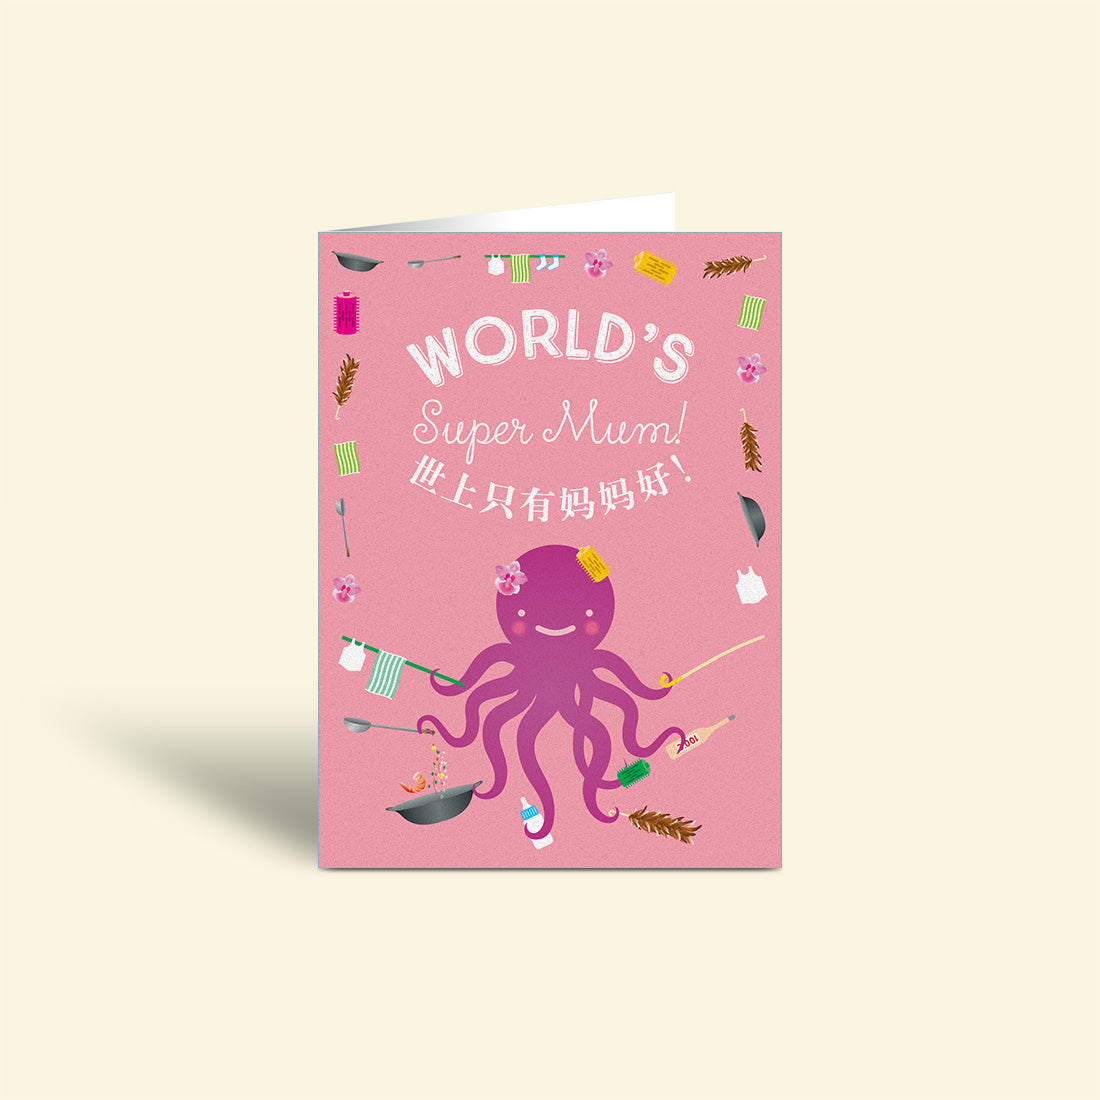 For Mum Card – World's Super Mum